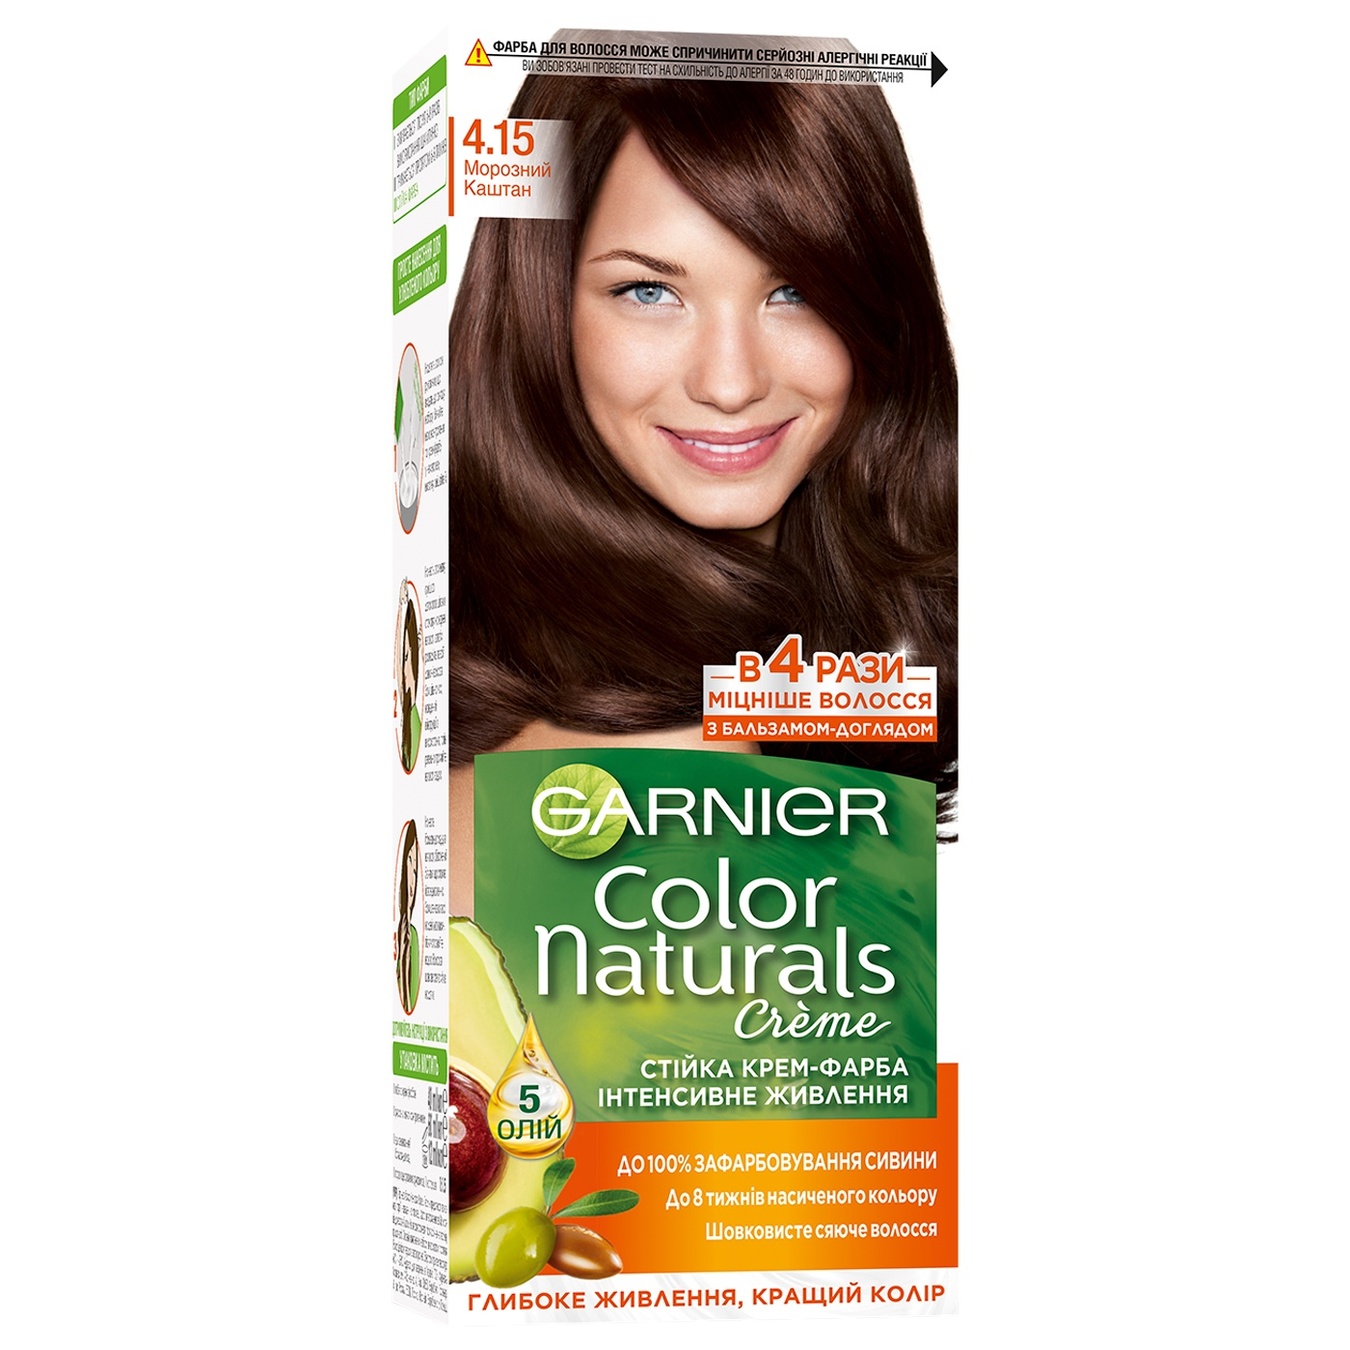 Garnier permanent hair color cream Color Naturals tone 4.15